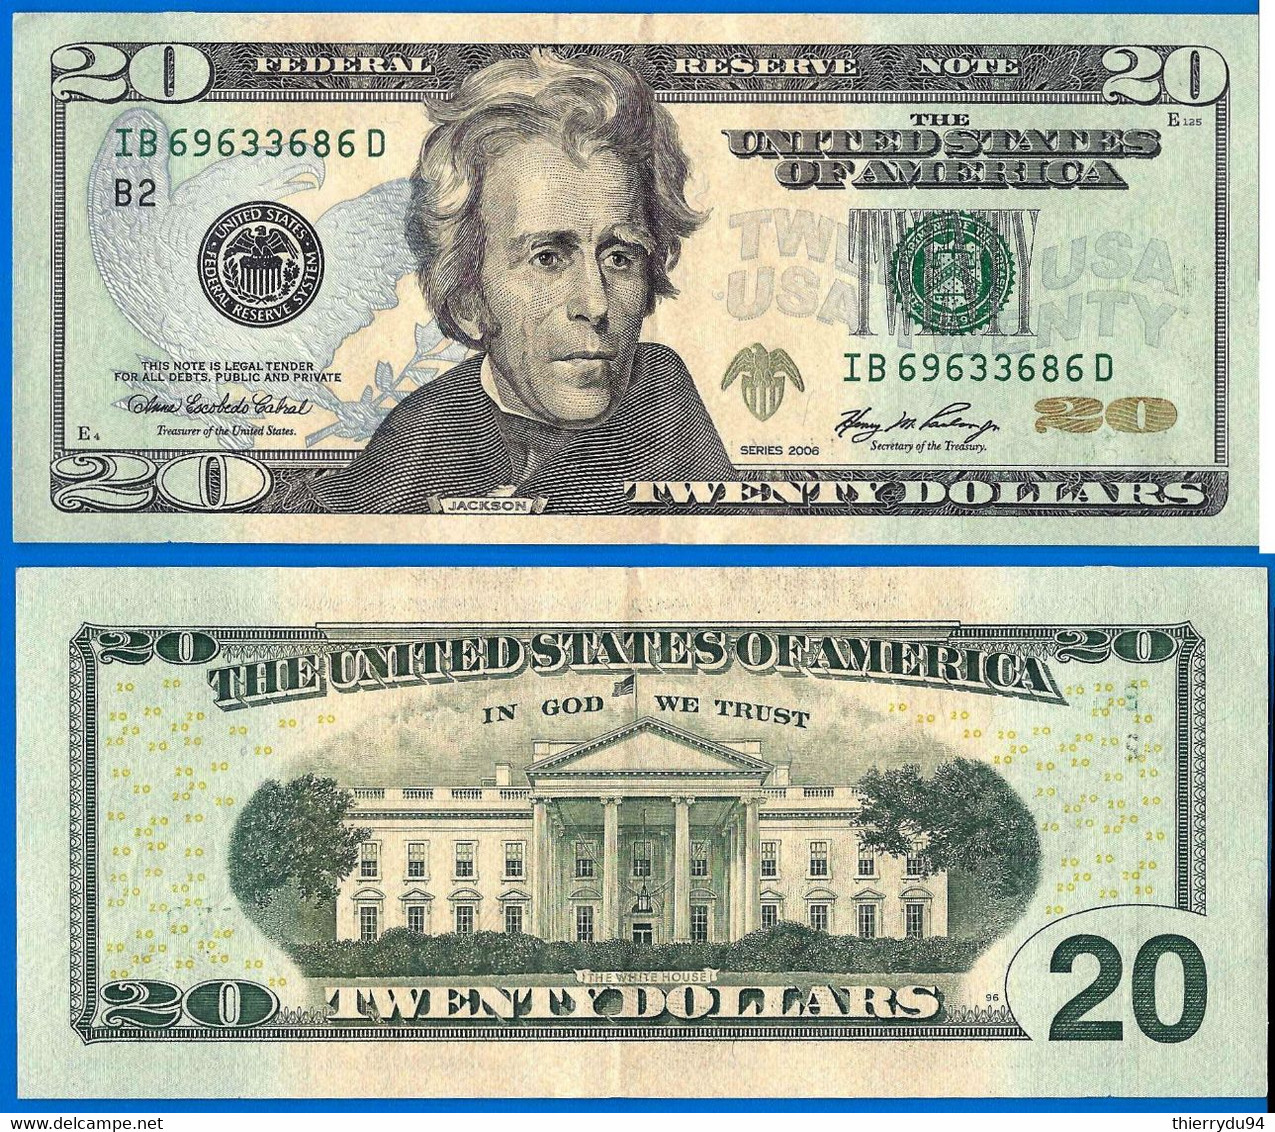 USA 20 Dollars 2006 Mint New York B2 Suffixe D Etats Unis United States Dollars US Paypal Crypto Bitcoin OK - Biljetten Van De Verenigde Staten (1862-1923)